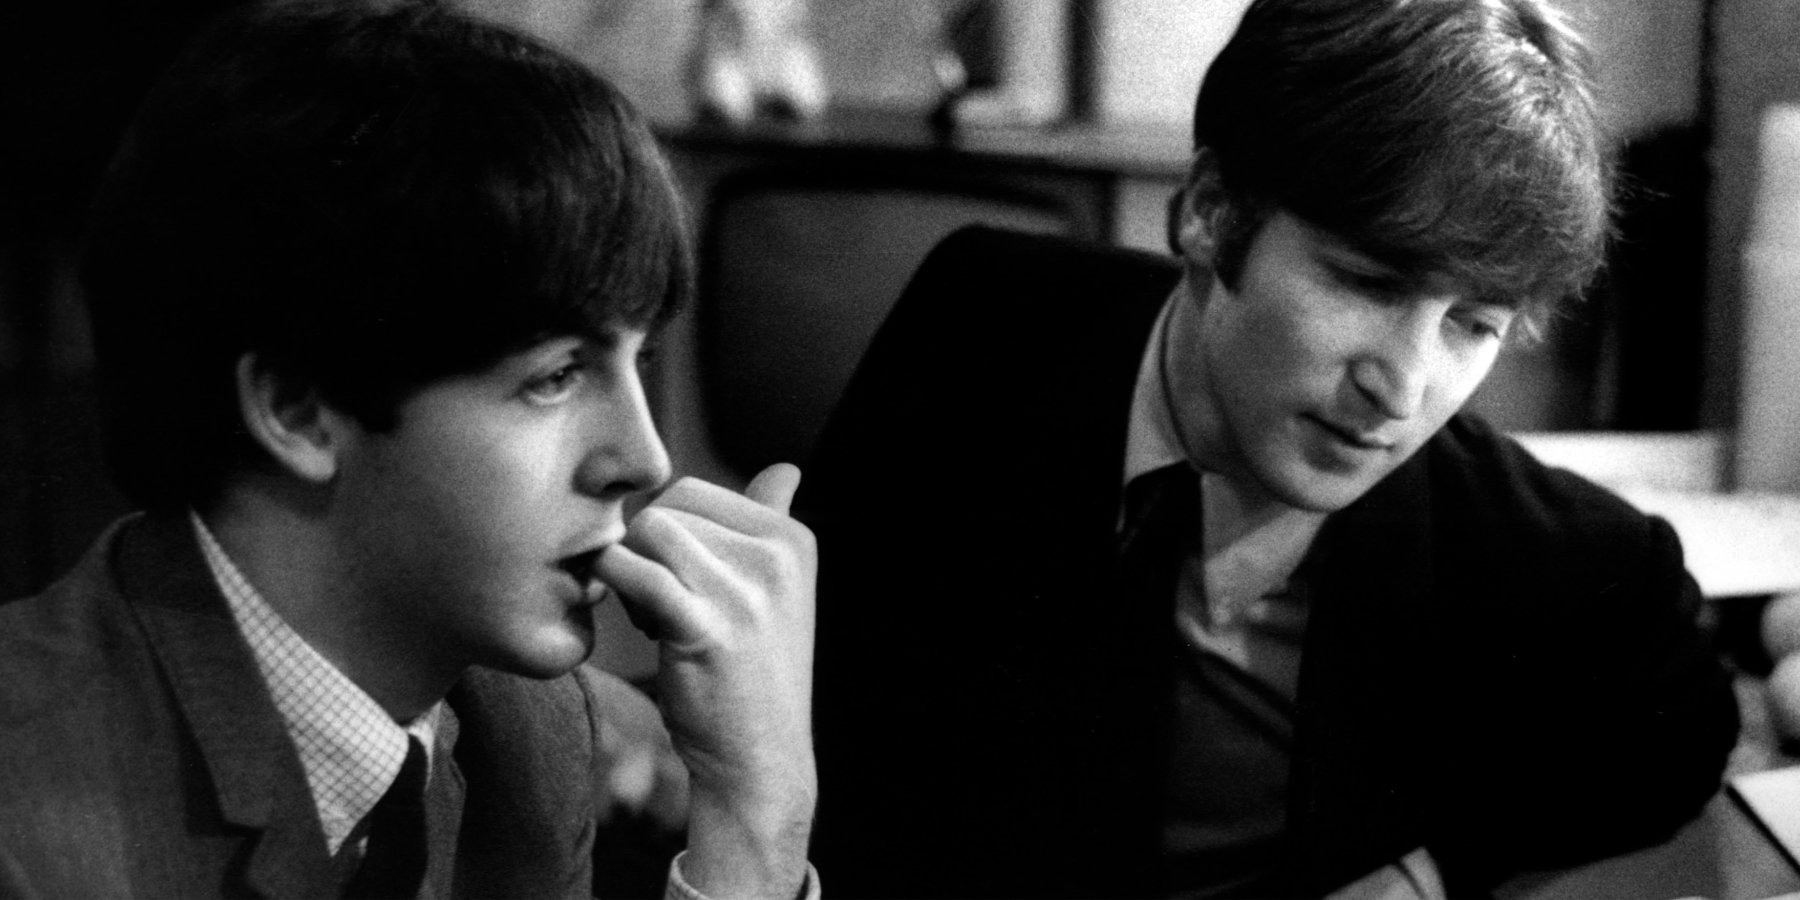 Paul McCartney and John Lennon pose in a vintage Beatles photo taken in 1963.